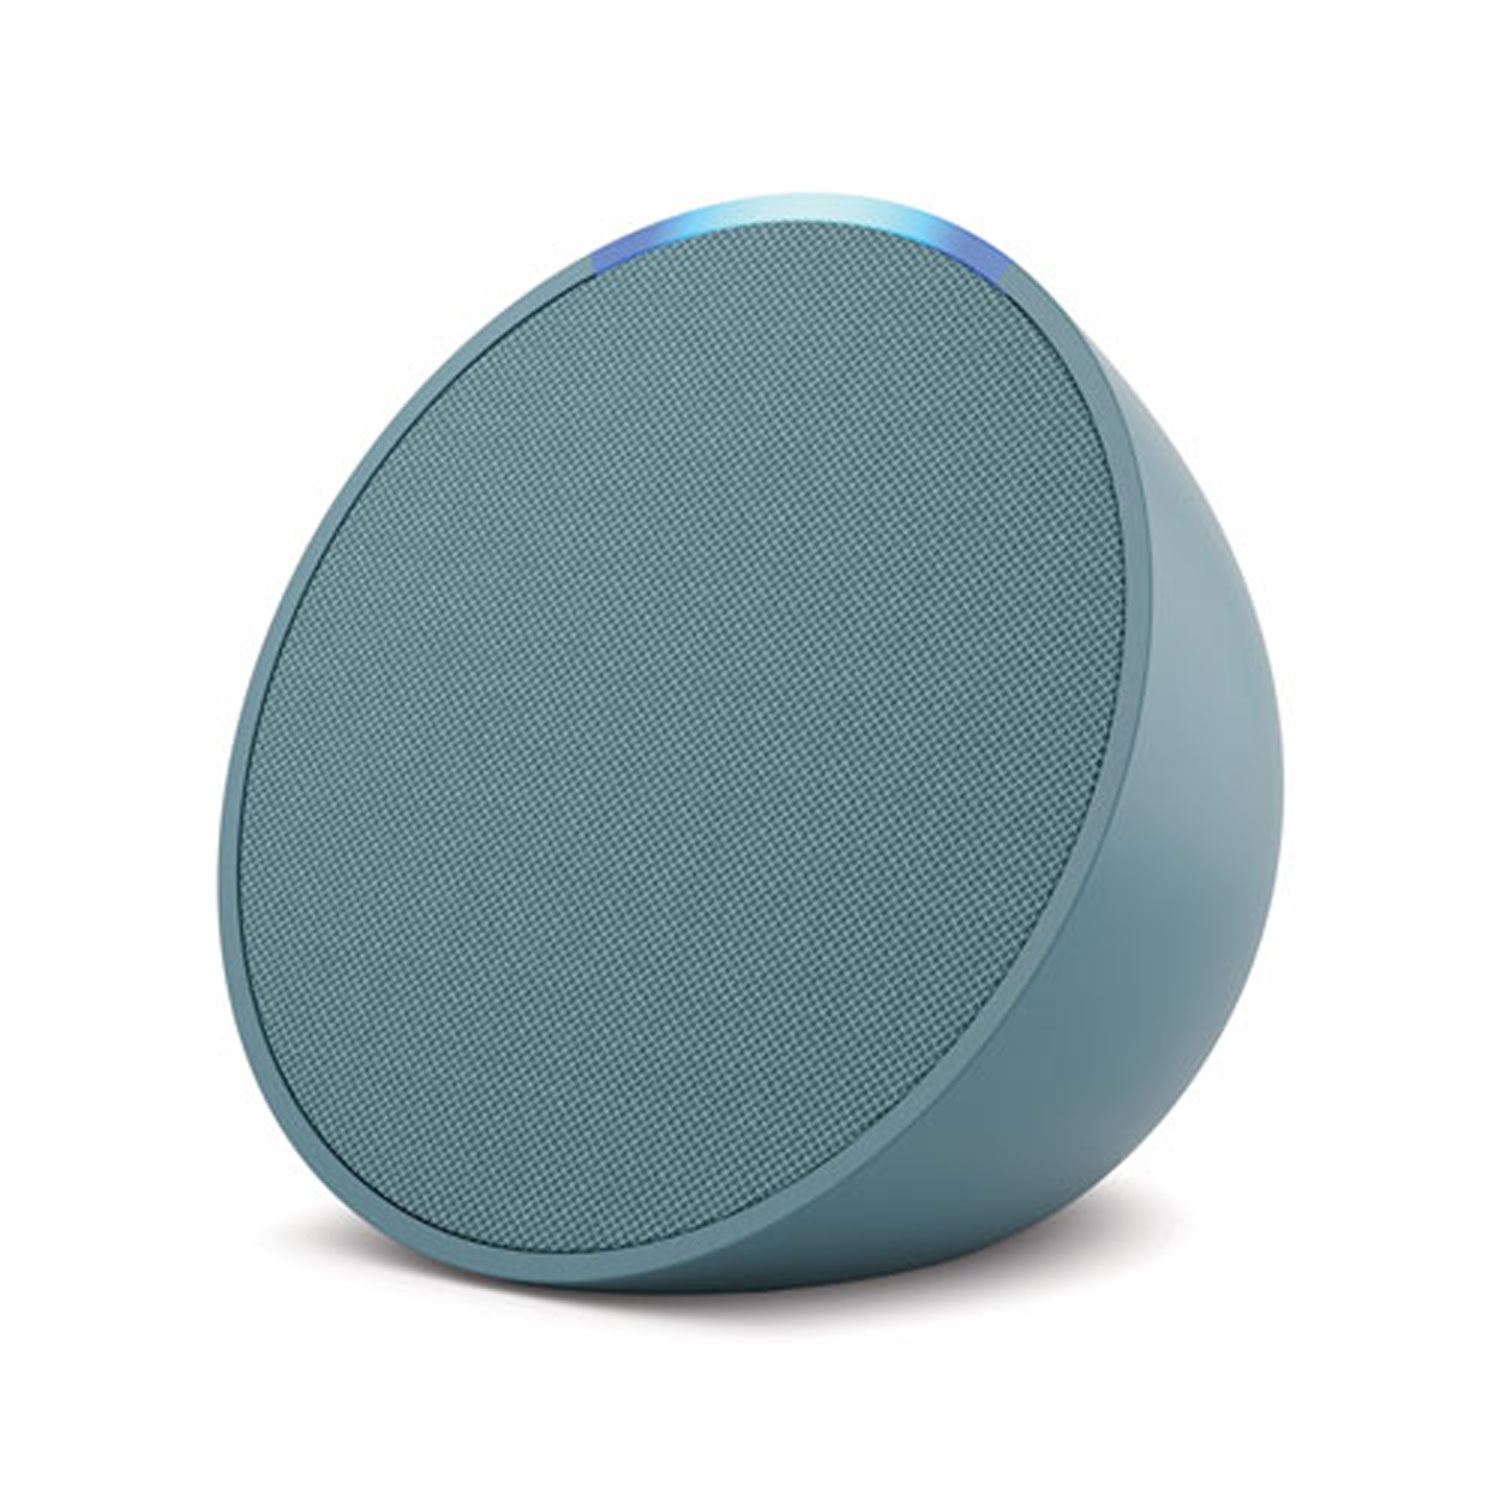 Amazon Echo Pop Smart Speaker with Alexa - Midnight Teal